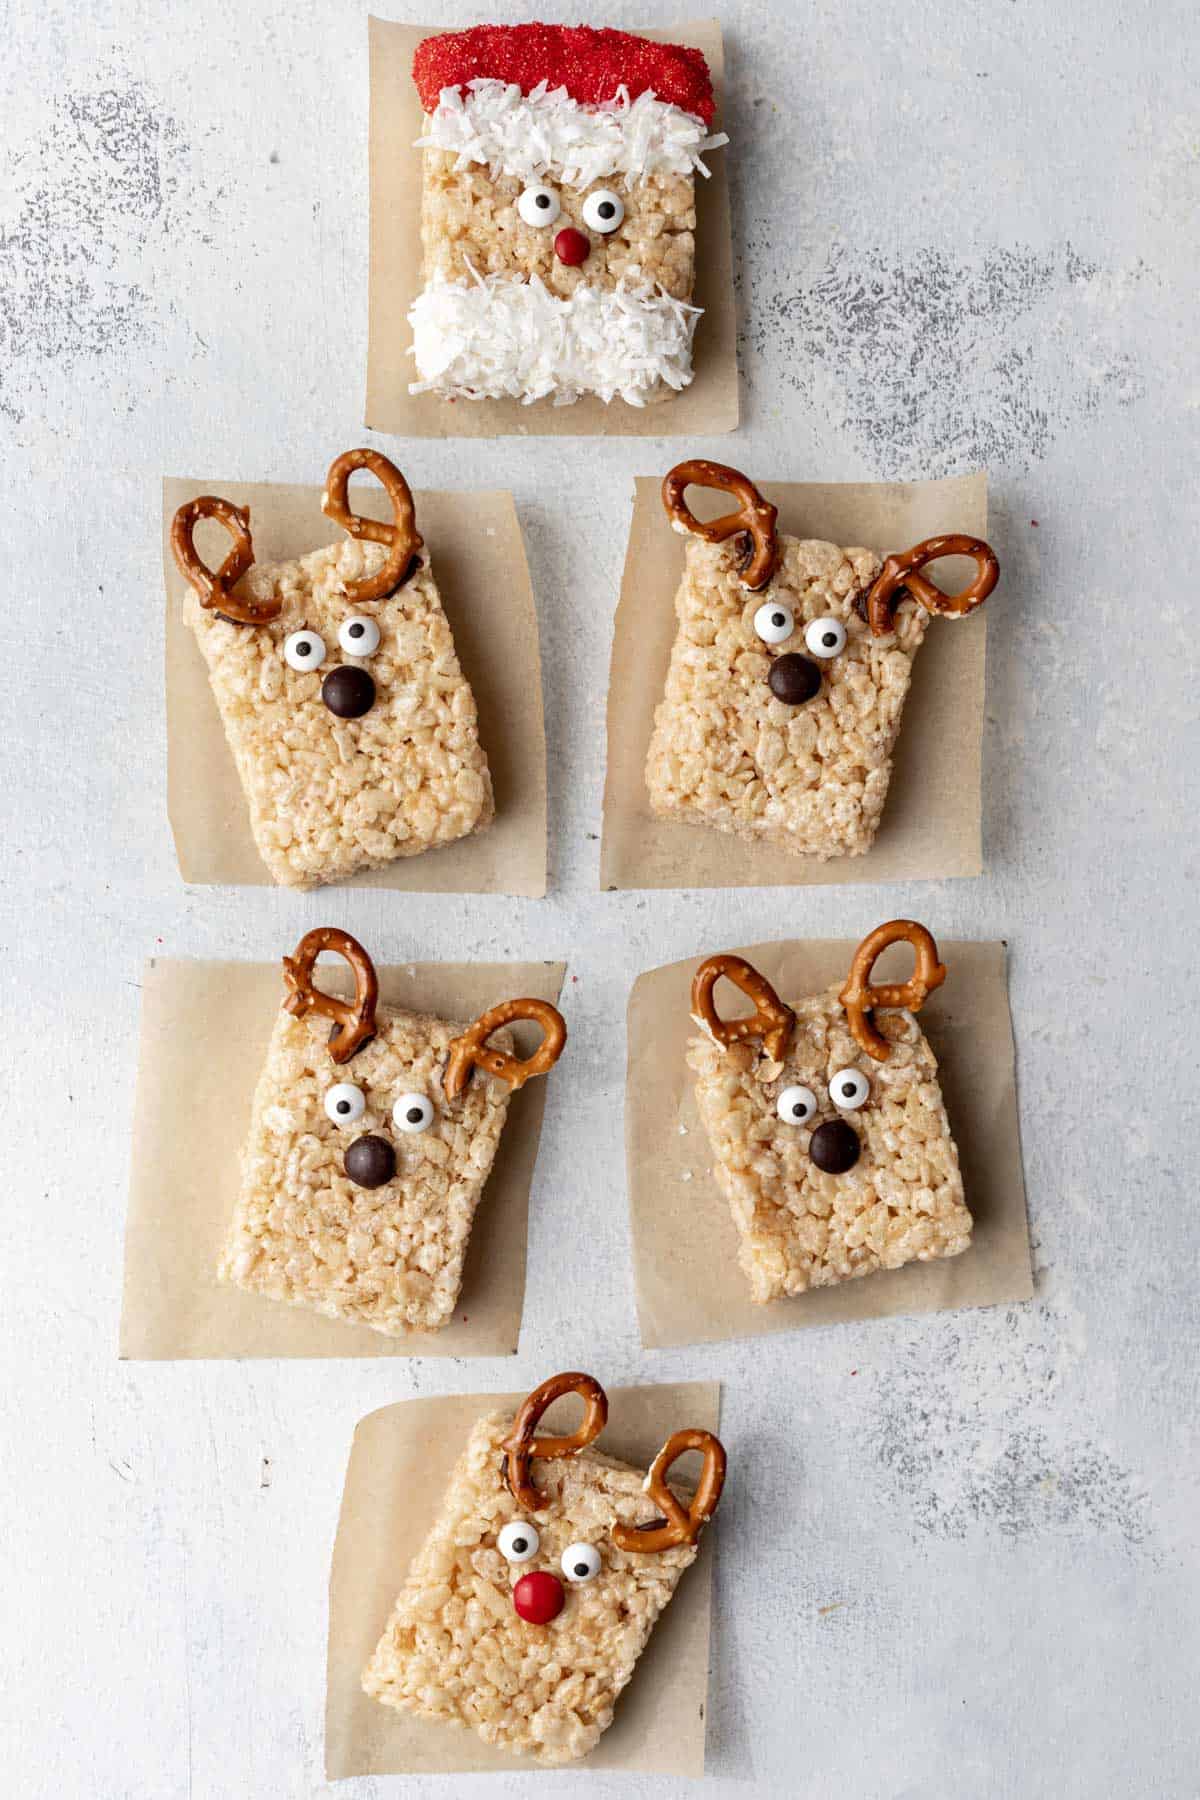 A santa rice krispie treat lined up with reindeer rice krispie treats.